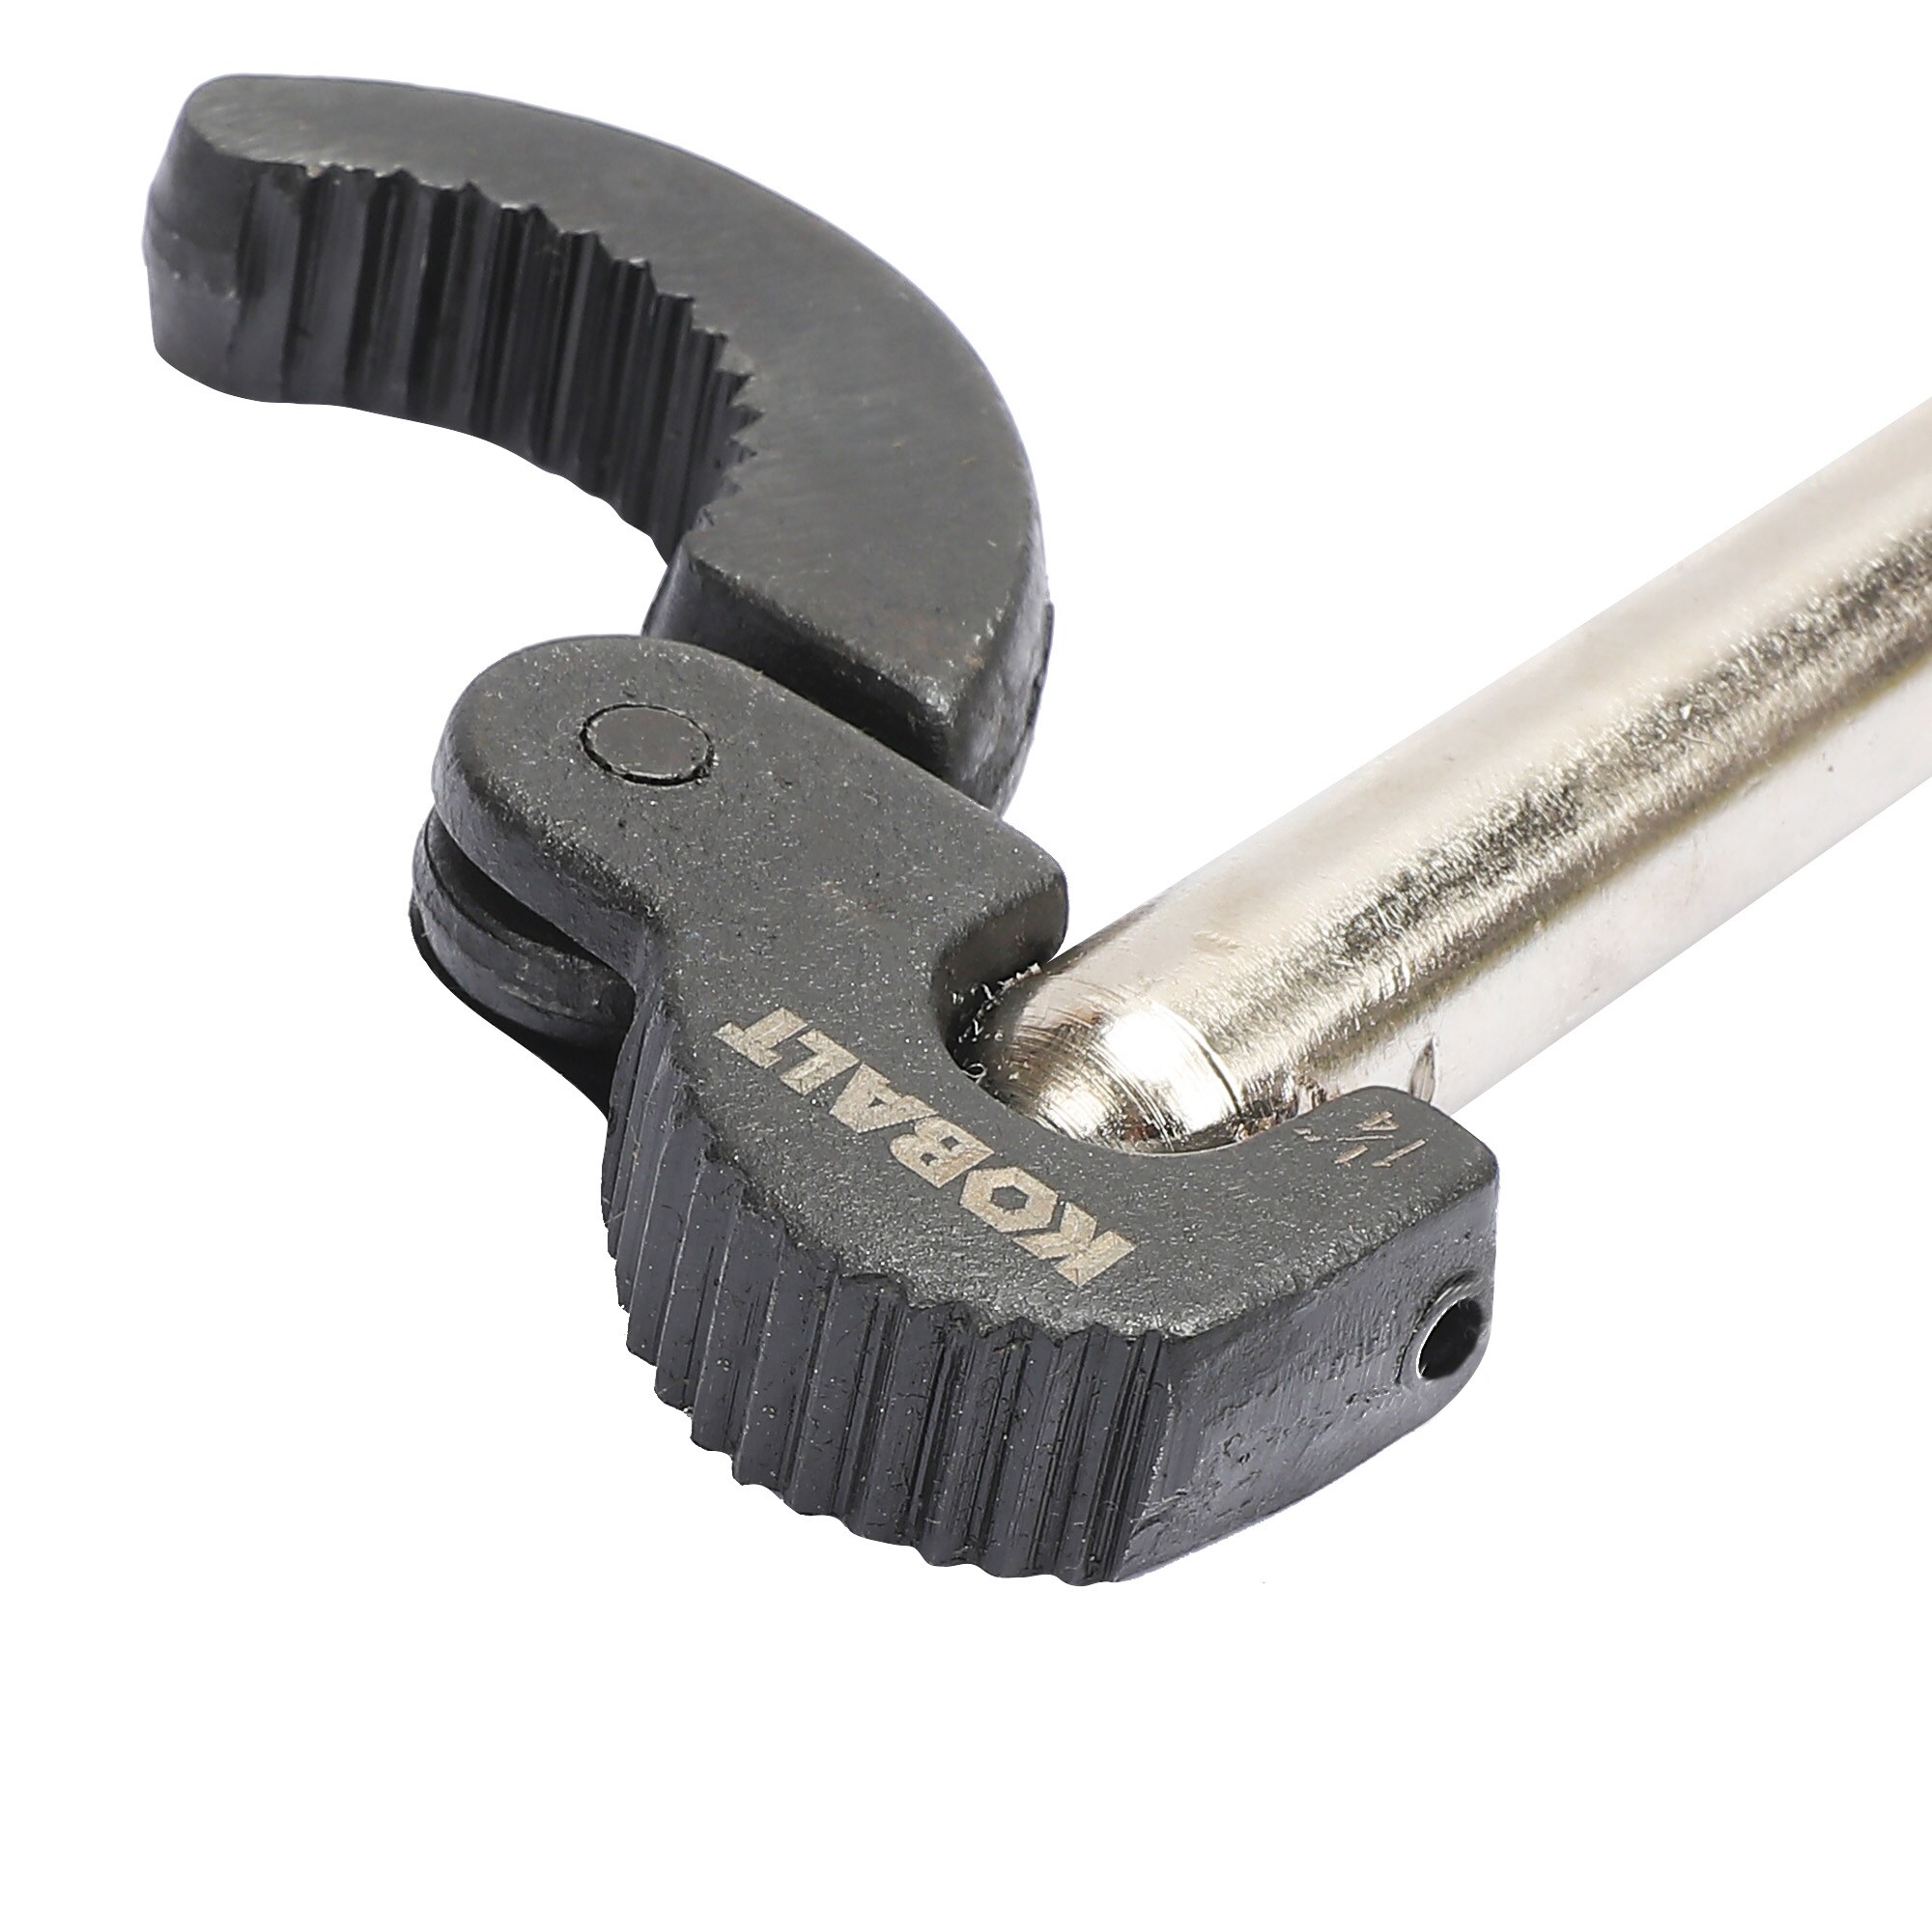 EMAGEREN Plumbing Tools Sink Wrench Multi-Purpose Plumbing Wrench Pipe Spanner 